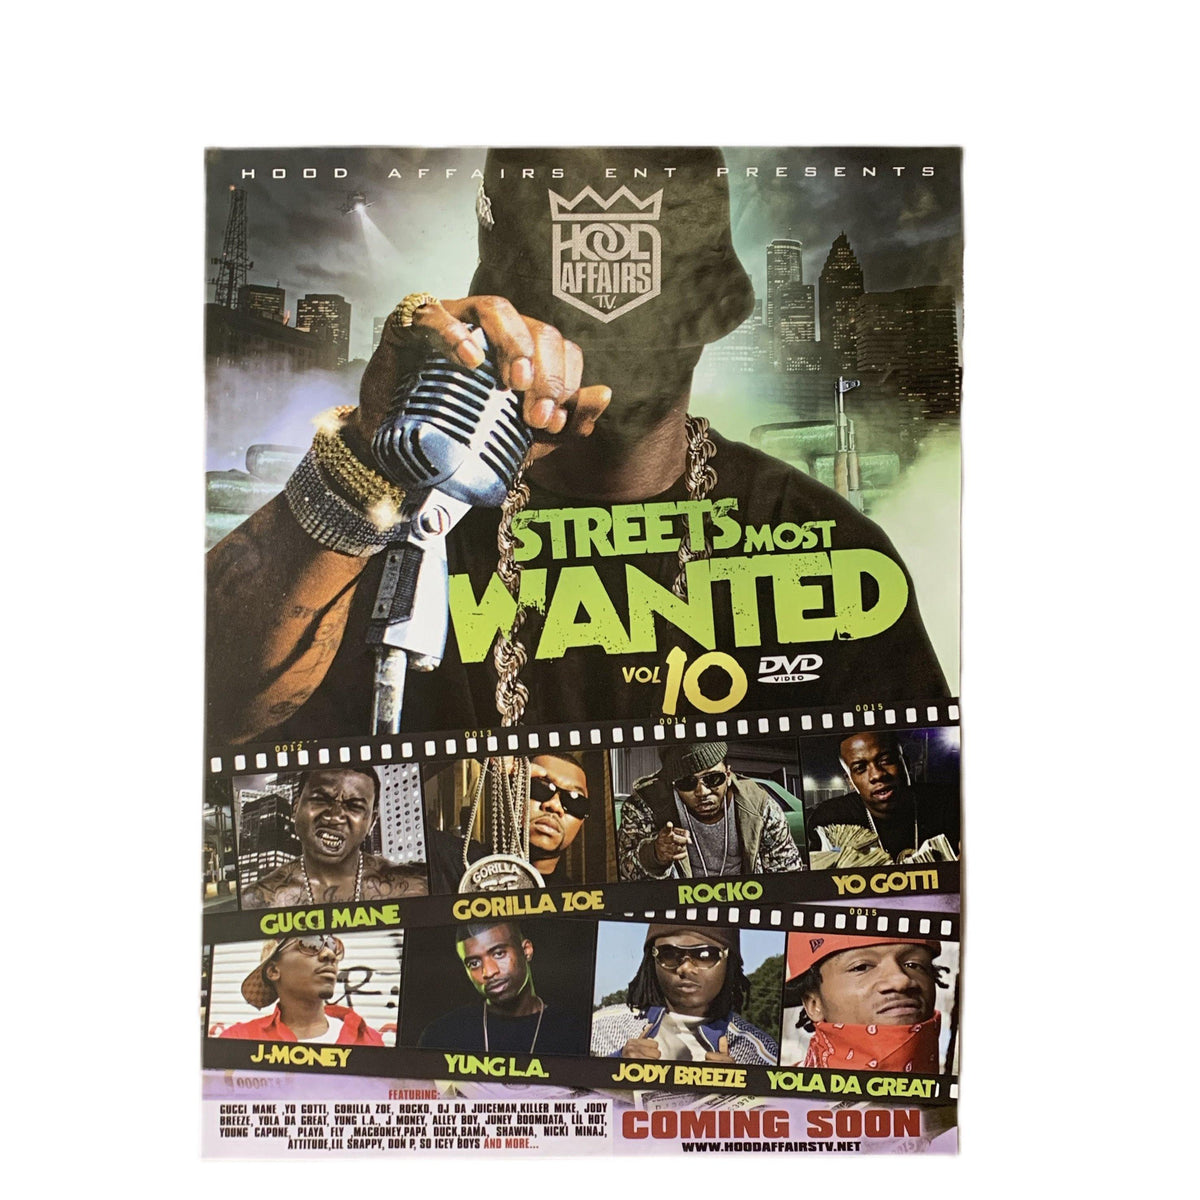 vintage original Streets Most Wanted Vol 10 Mixtape Poster Gucci Mane Gorilla Zoe Rocko Yo Got J-Money Yung L.A. Jody Breeze Yola Da Great